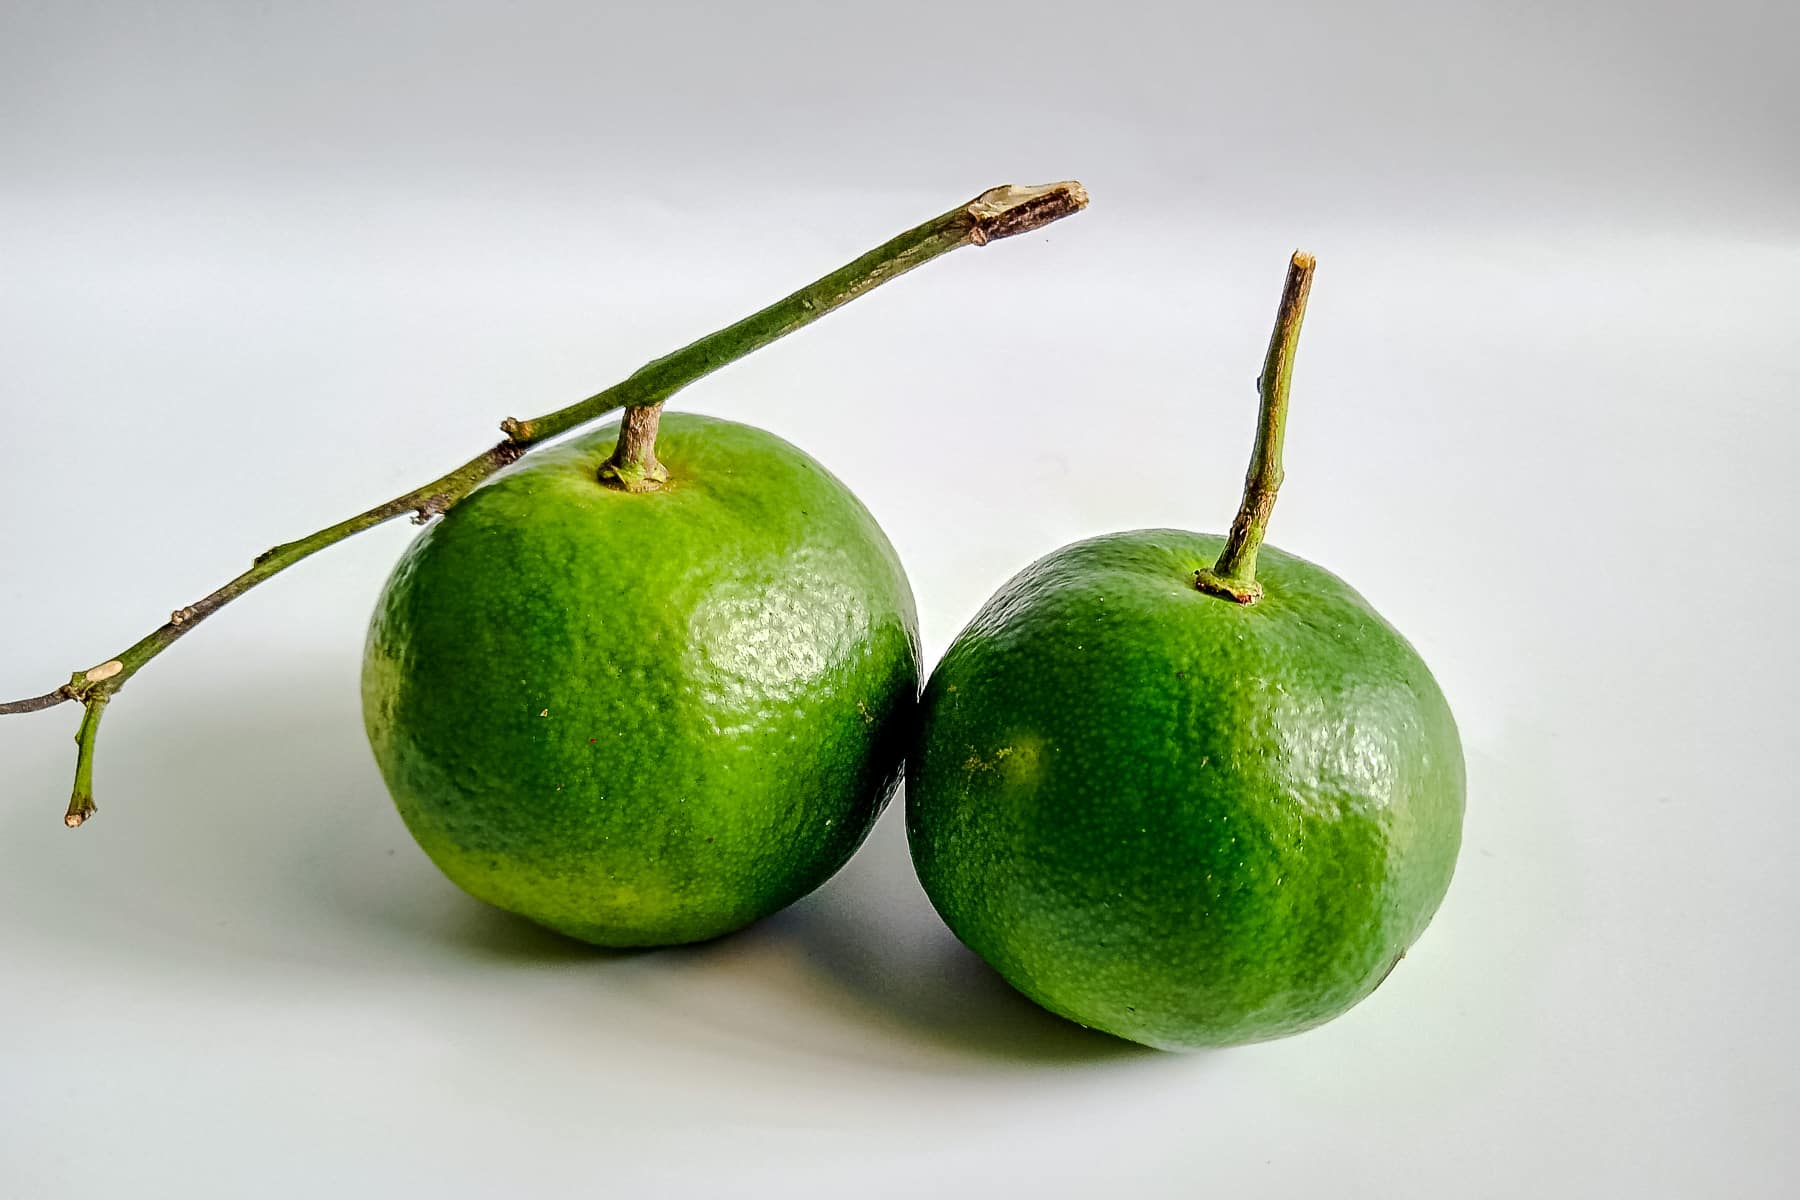 Dalandan citrus with a lime green exterior and vibrant orange flesh.